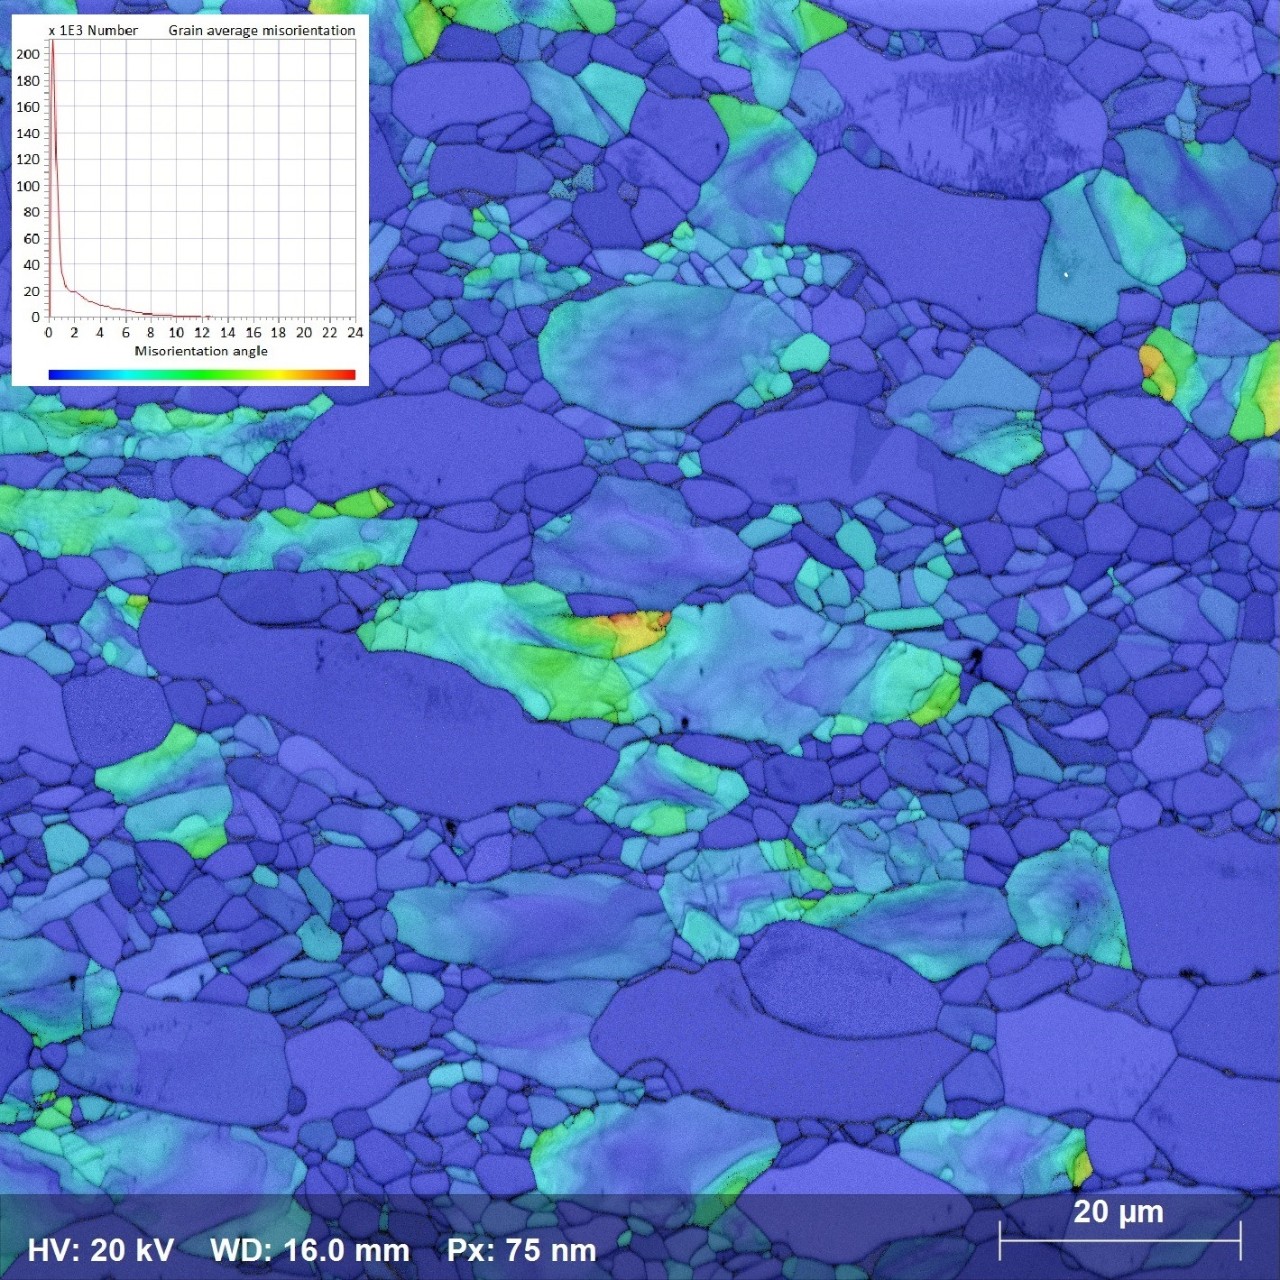 Grain Average Misorientation (GAM) map of Alpha-Beta Ti-alloy sample